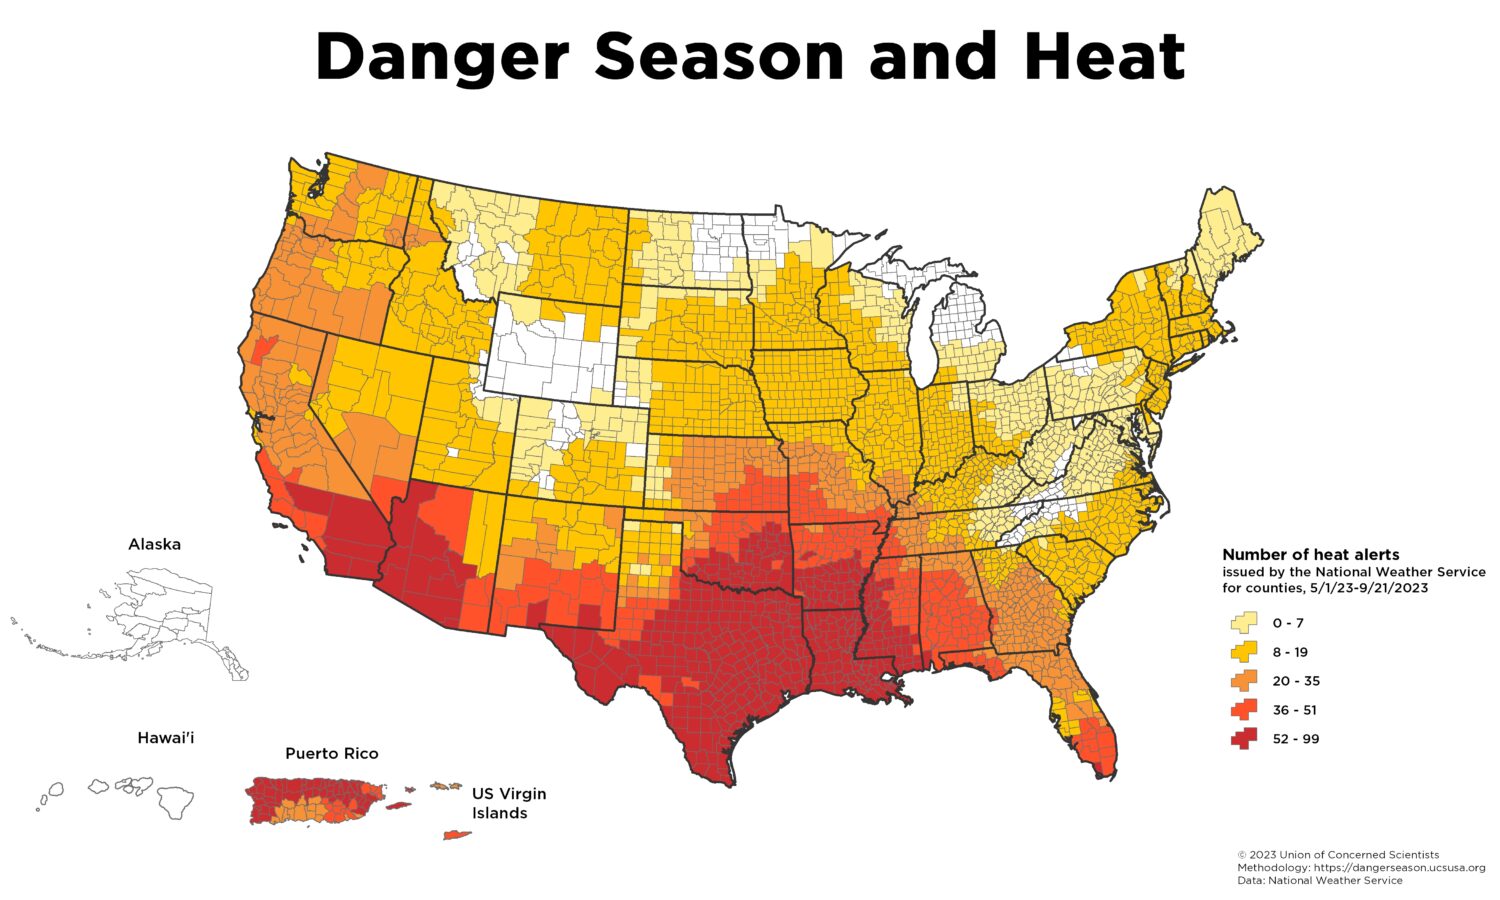 Our Danger Season tracker shows how much of the Sun Belt spent most of the summer under heat alerts. See: https://dangerseason.ucsusa.org/